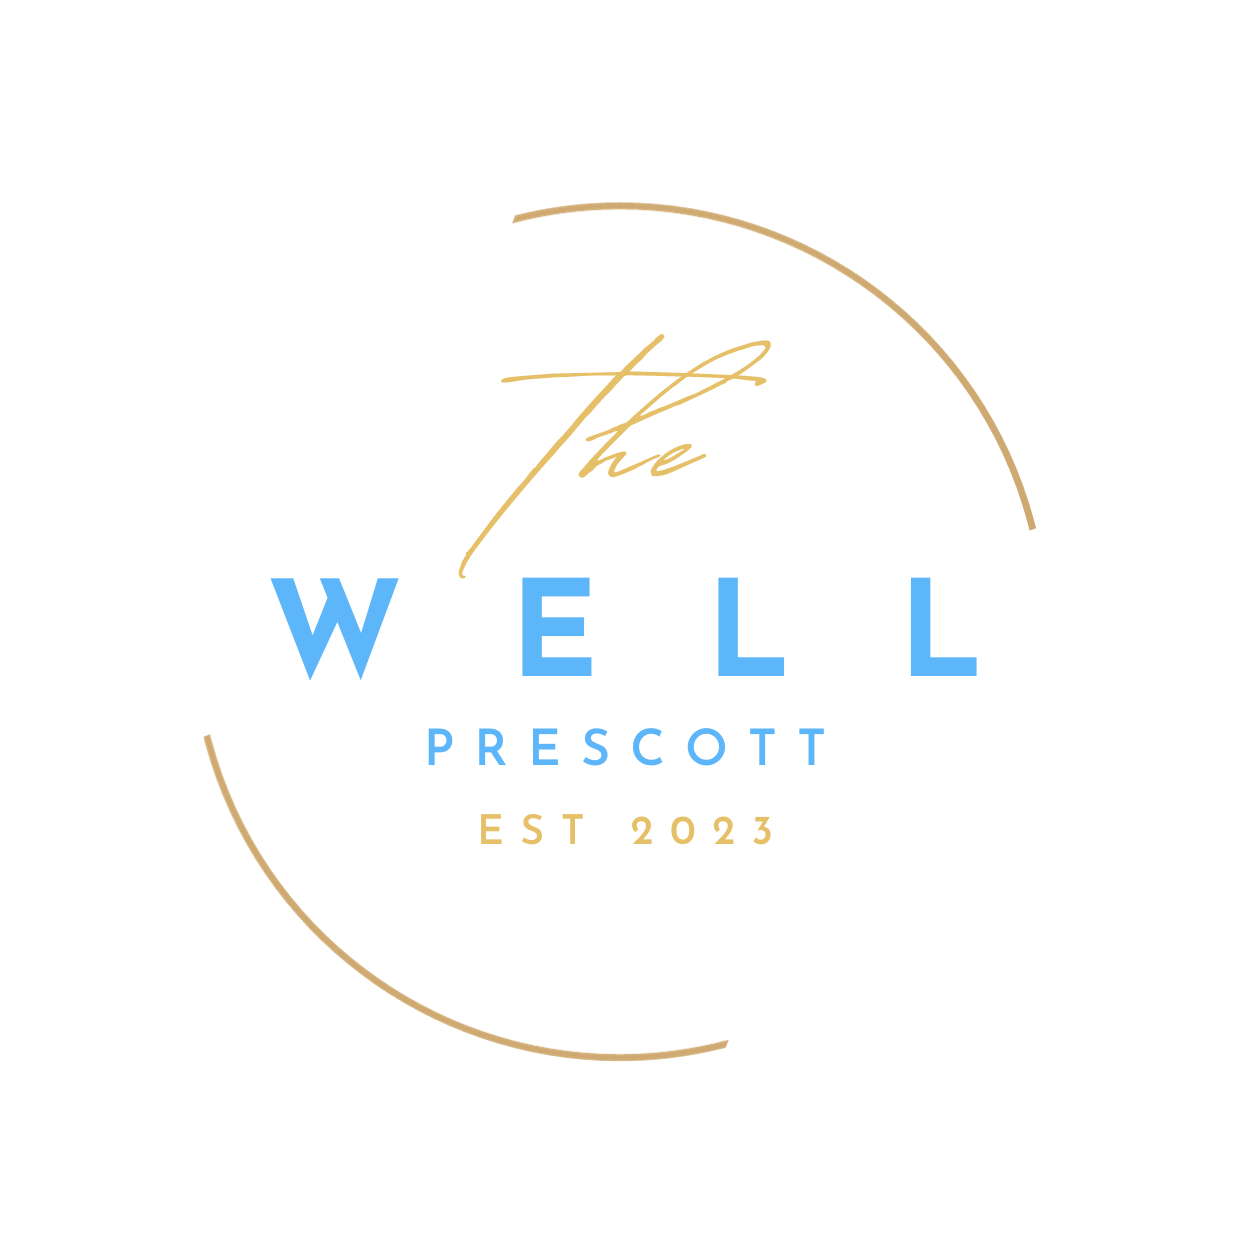 The Well Prescott